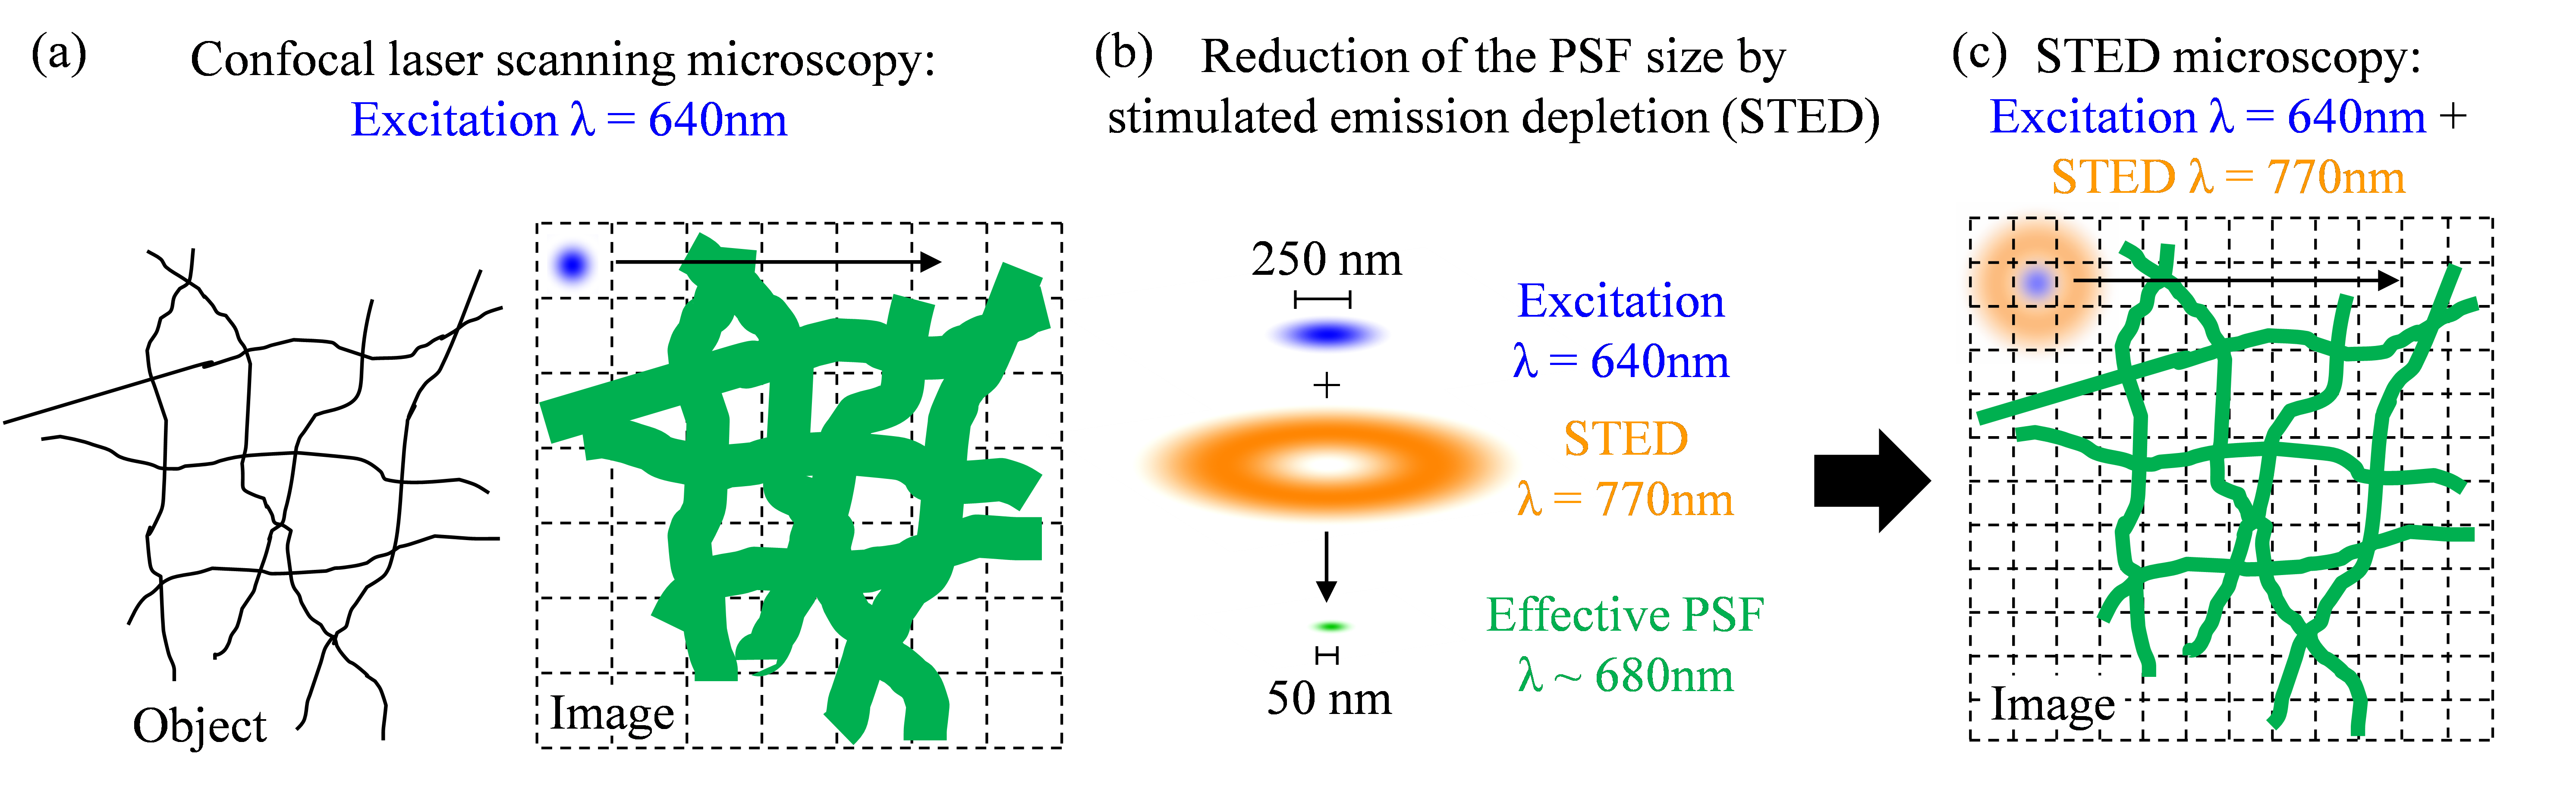 Figure 1. Principle of Stimulated Emission Depletion microscopy (STED).